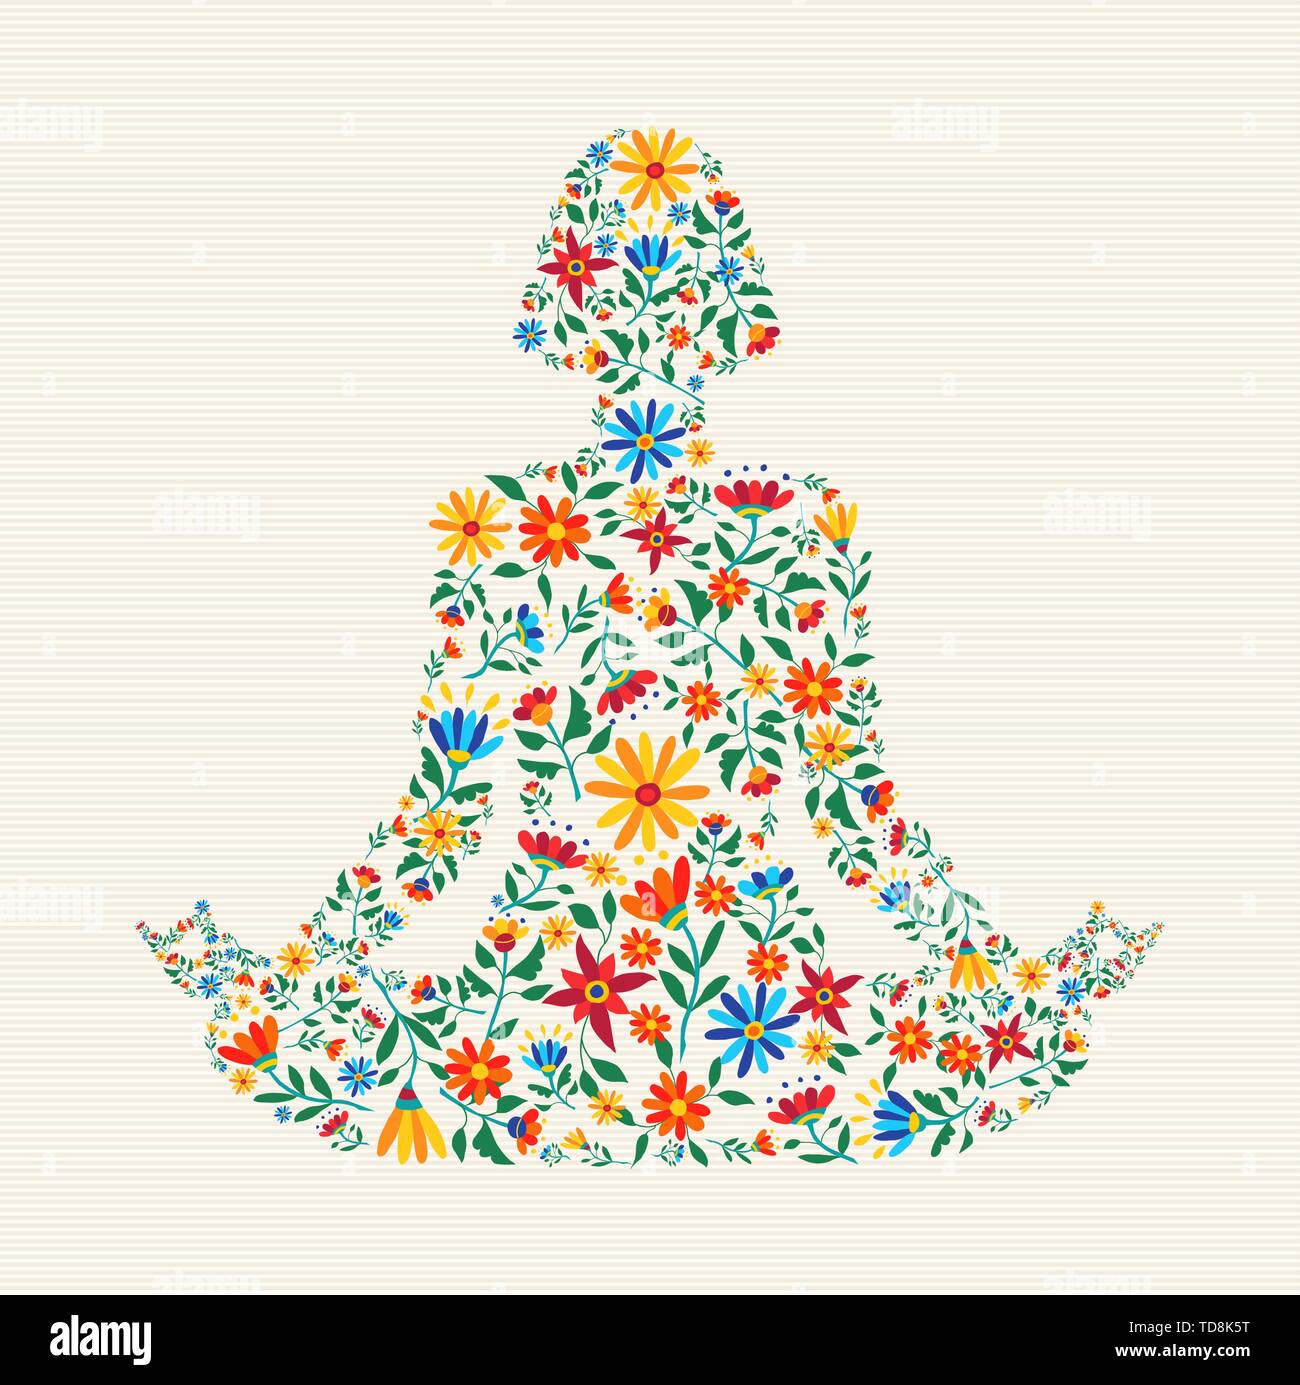 Frau silhouette Yoga lotus Pose von bunten Frühling Blumen für Natur-Konzept. Stock Vektor